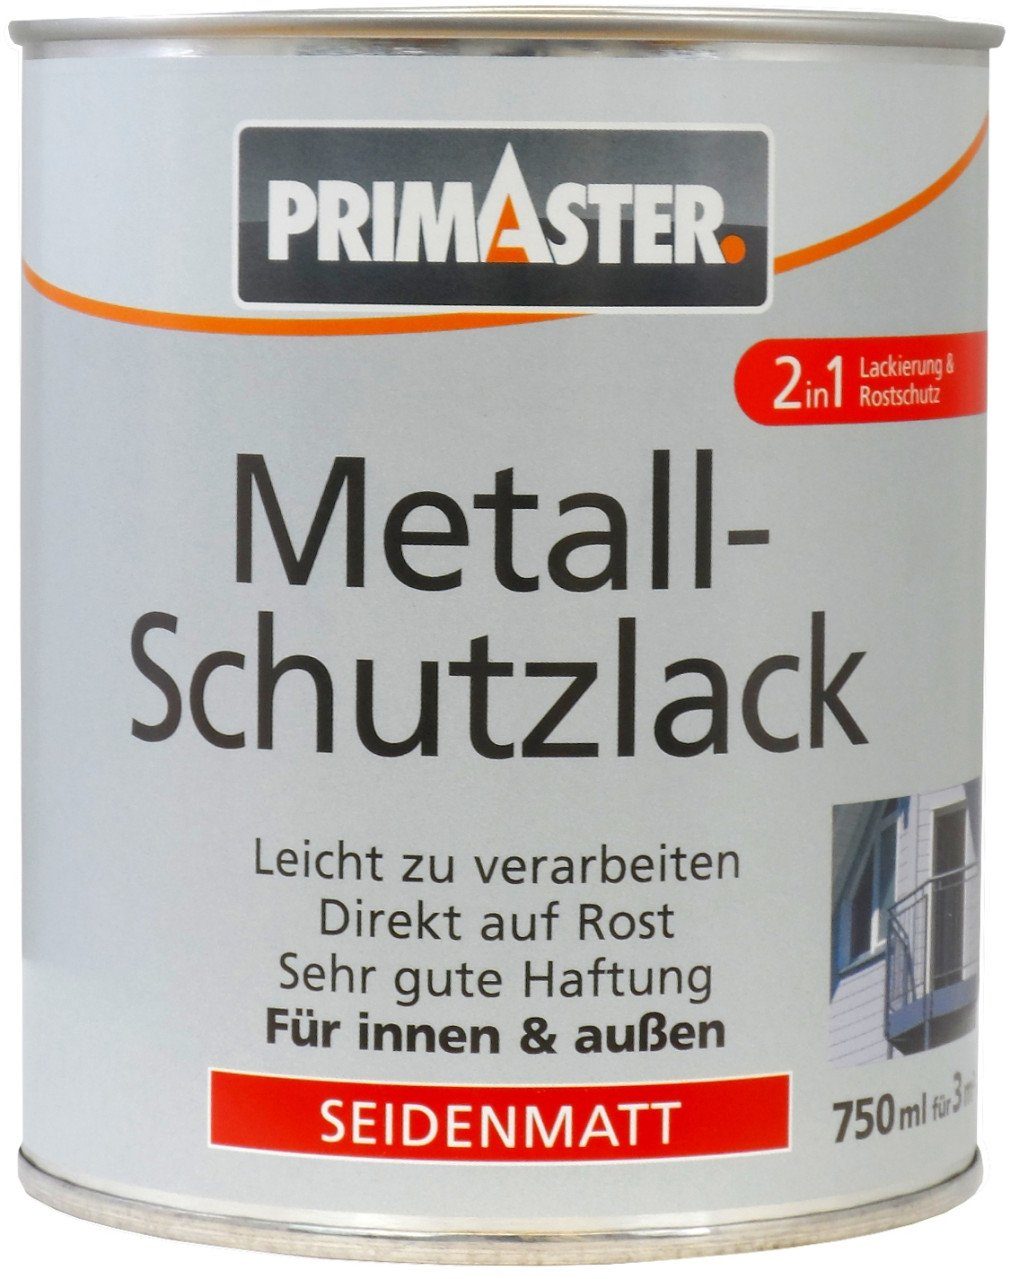 Primaster Metallschutzlack ml RAL Metall-Schutzlack 750 6005 Primaster